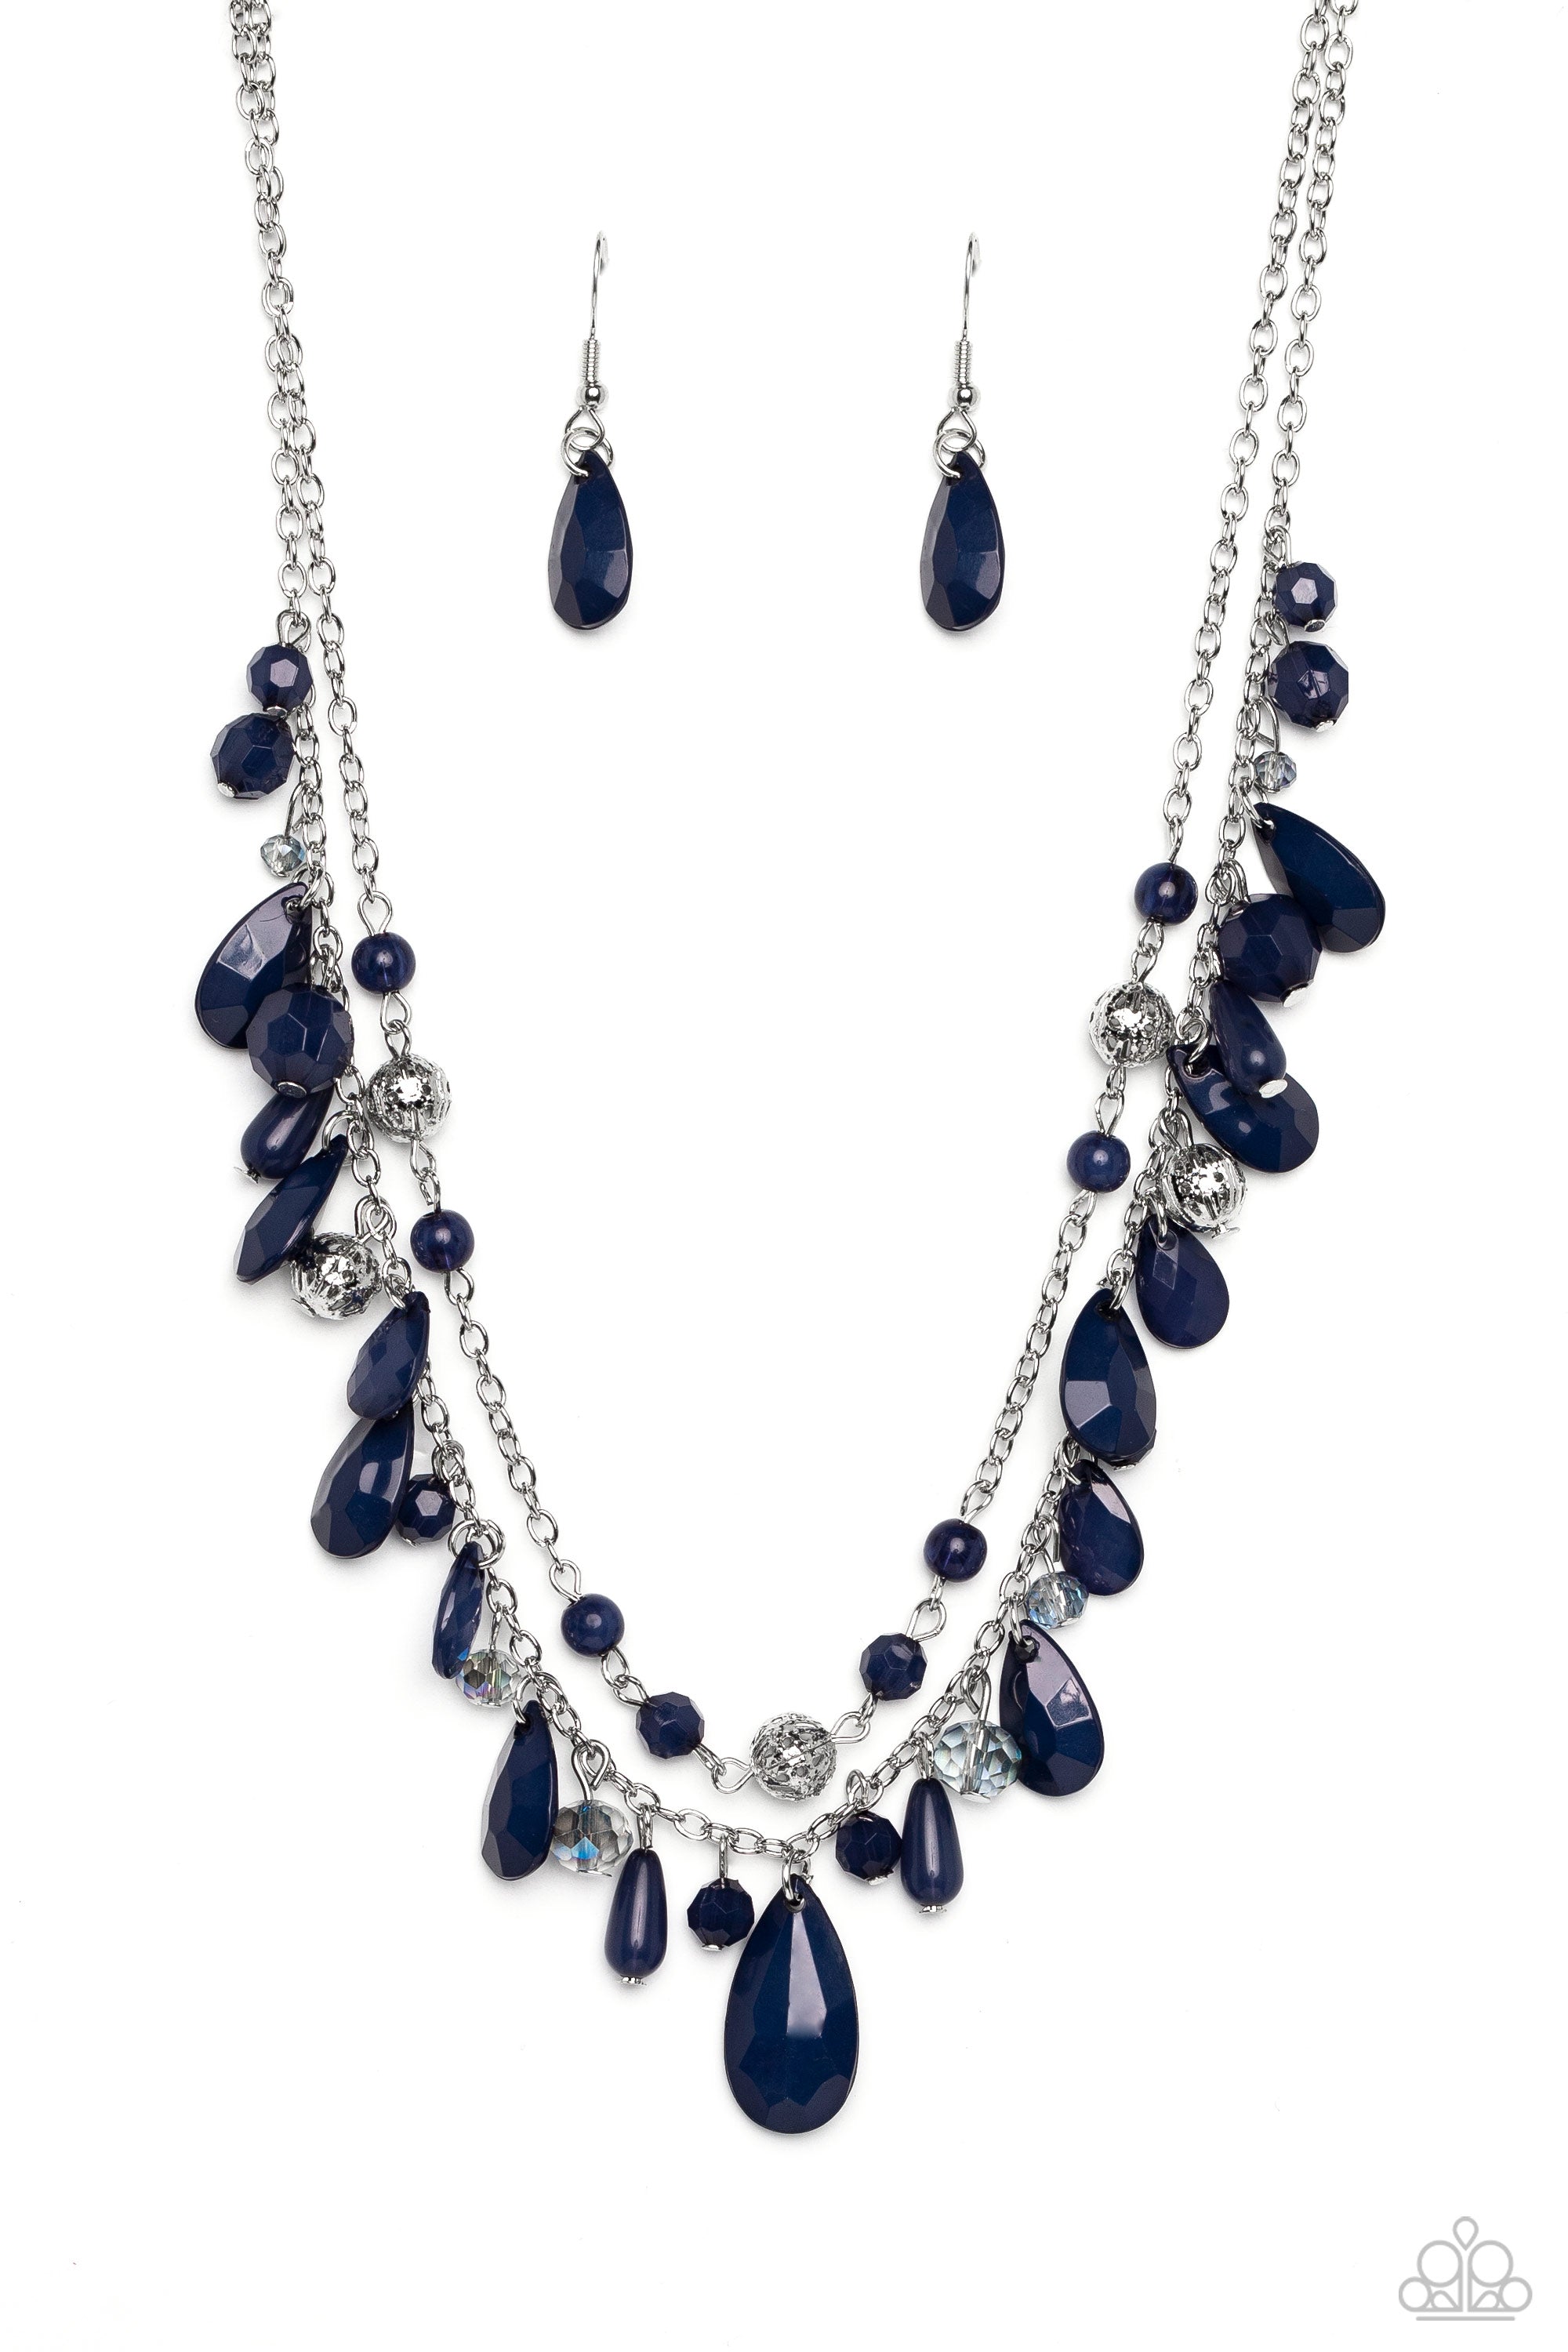 Flirty Flood Blue Necklace - Paparazzi Accessories- lightbox - CarasShop.com - $5 Jewelry by Cara Jewels